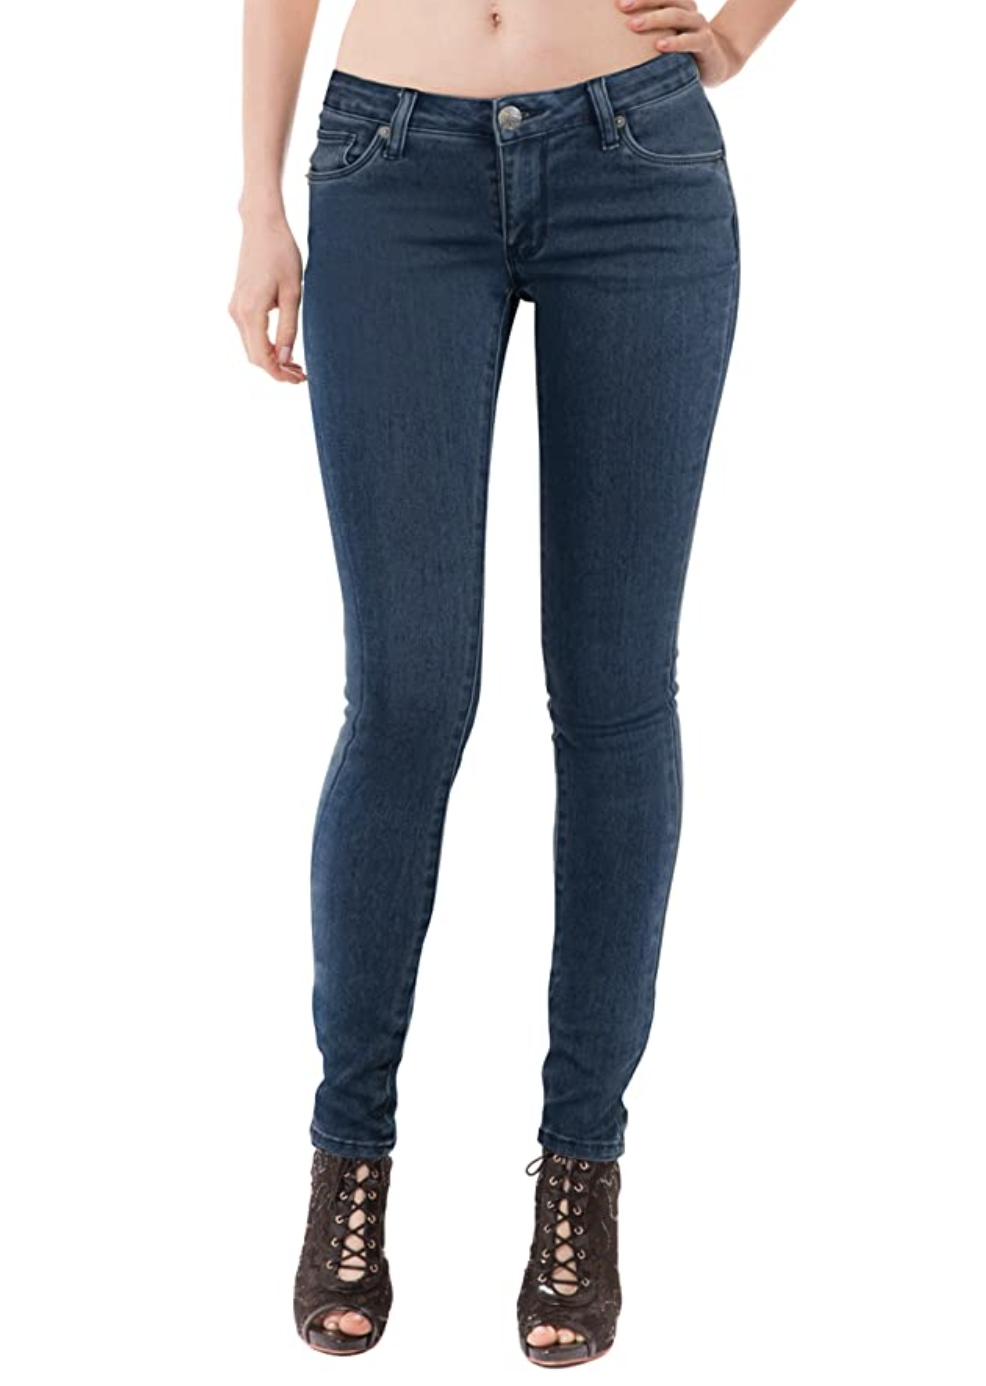 Hybrid & Co. Women's Butt Lift Super Comfy Stretch Denim Skinny Yoga Jeans